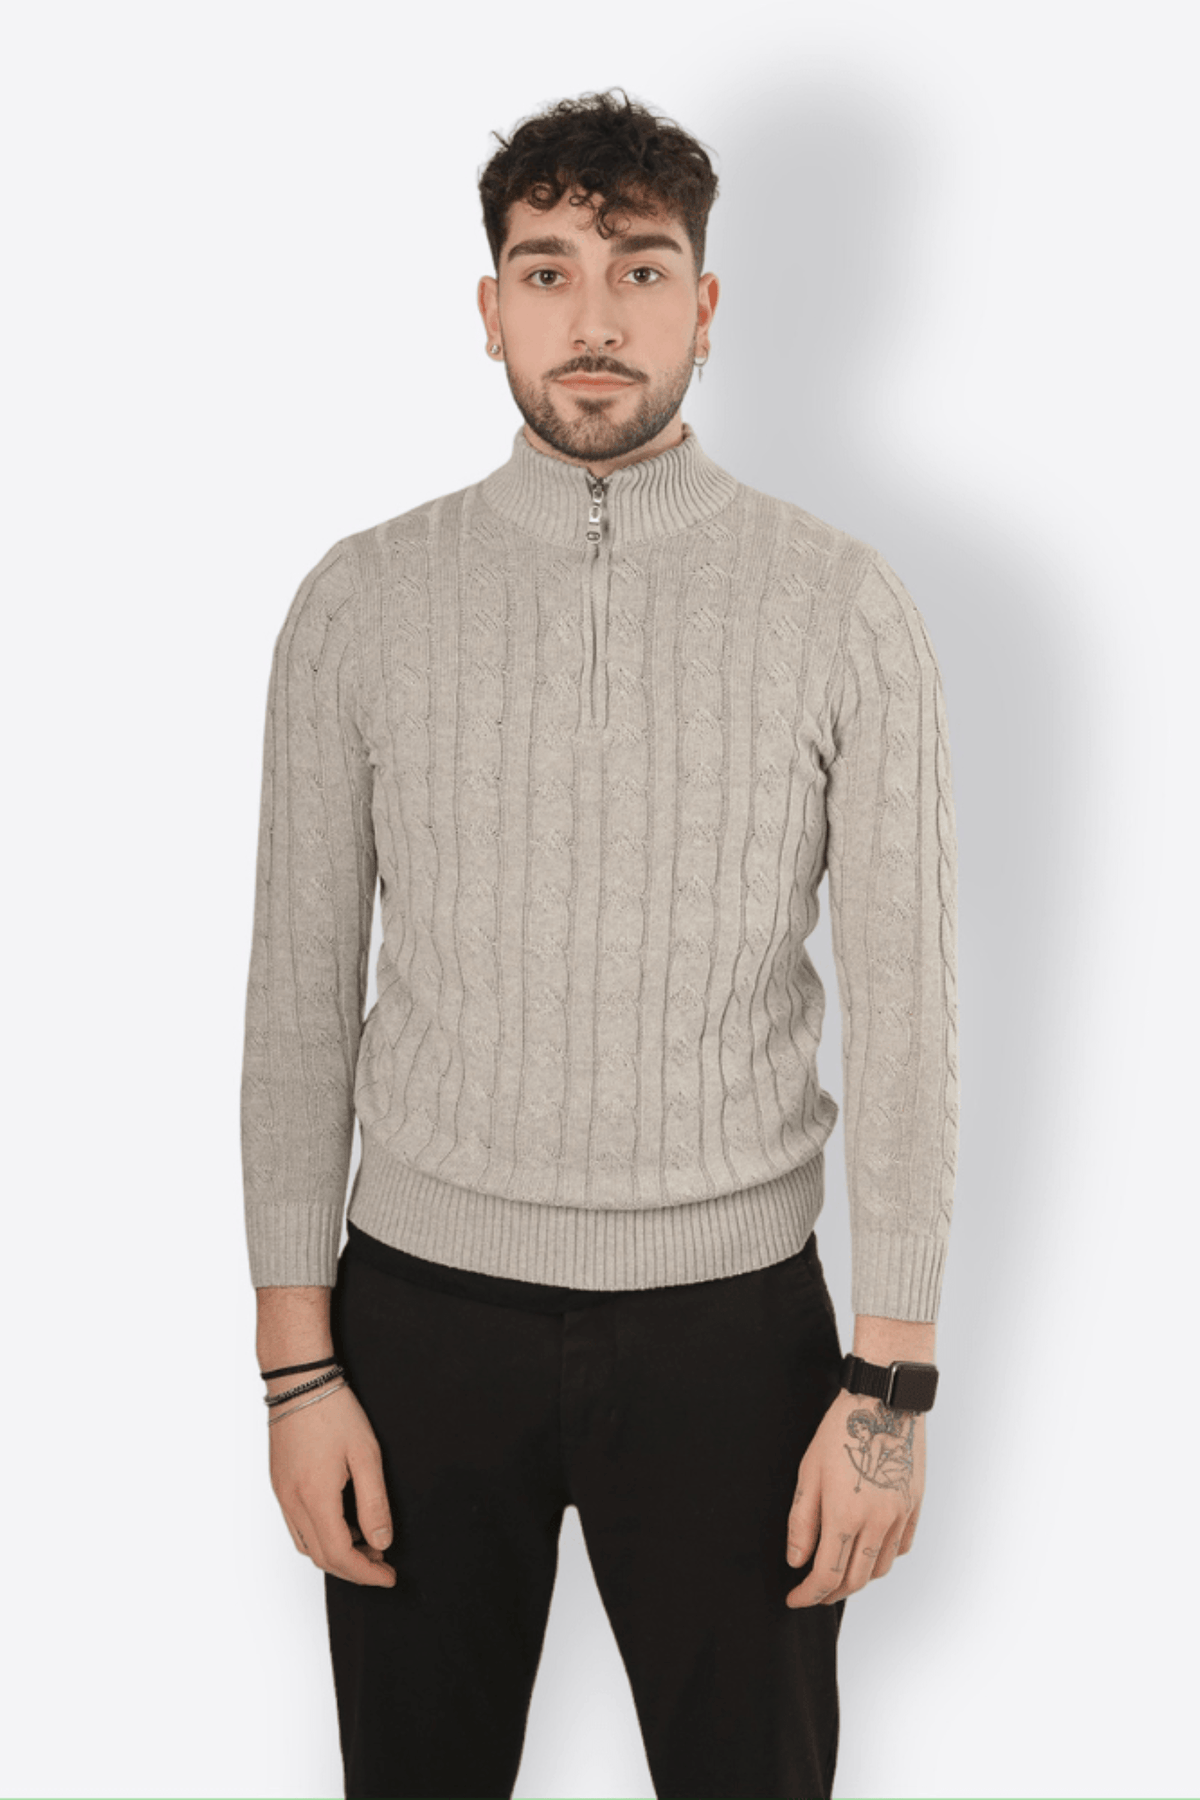 Alessandro Toscani™ AURELIO™ | Half-Collar Sweater with Zipper